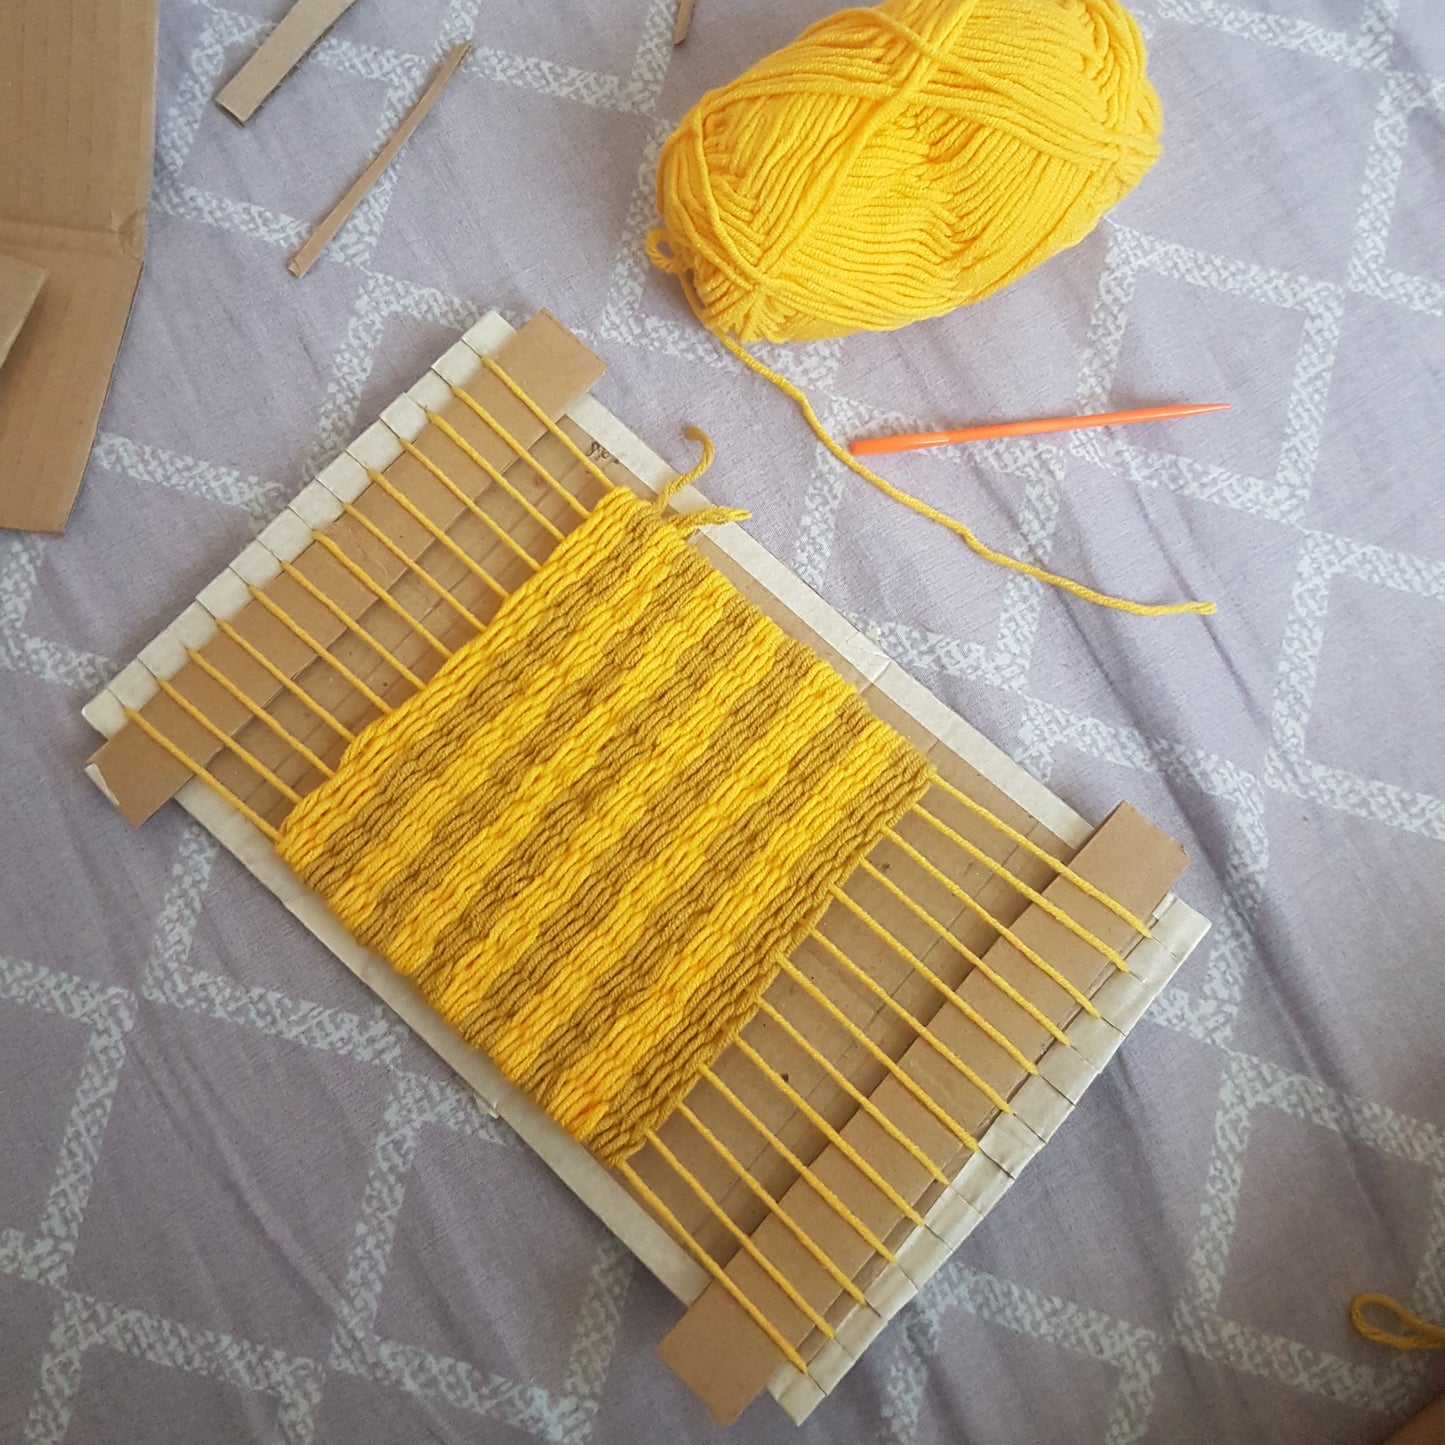 Weave-It-Yourself Cardboard Loom Woven Coaster